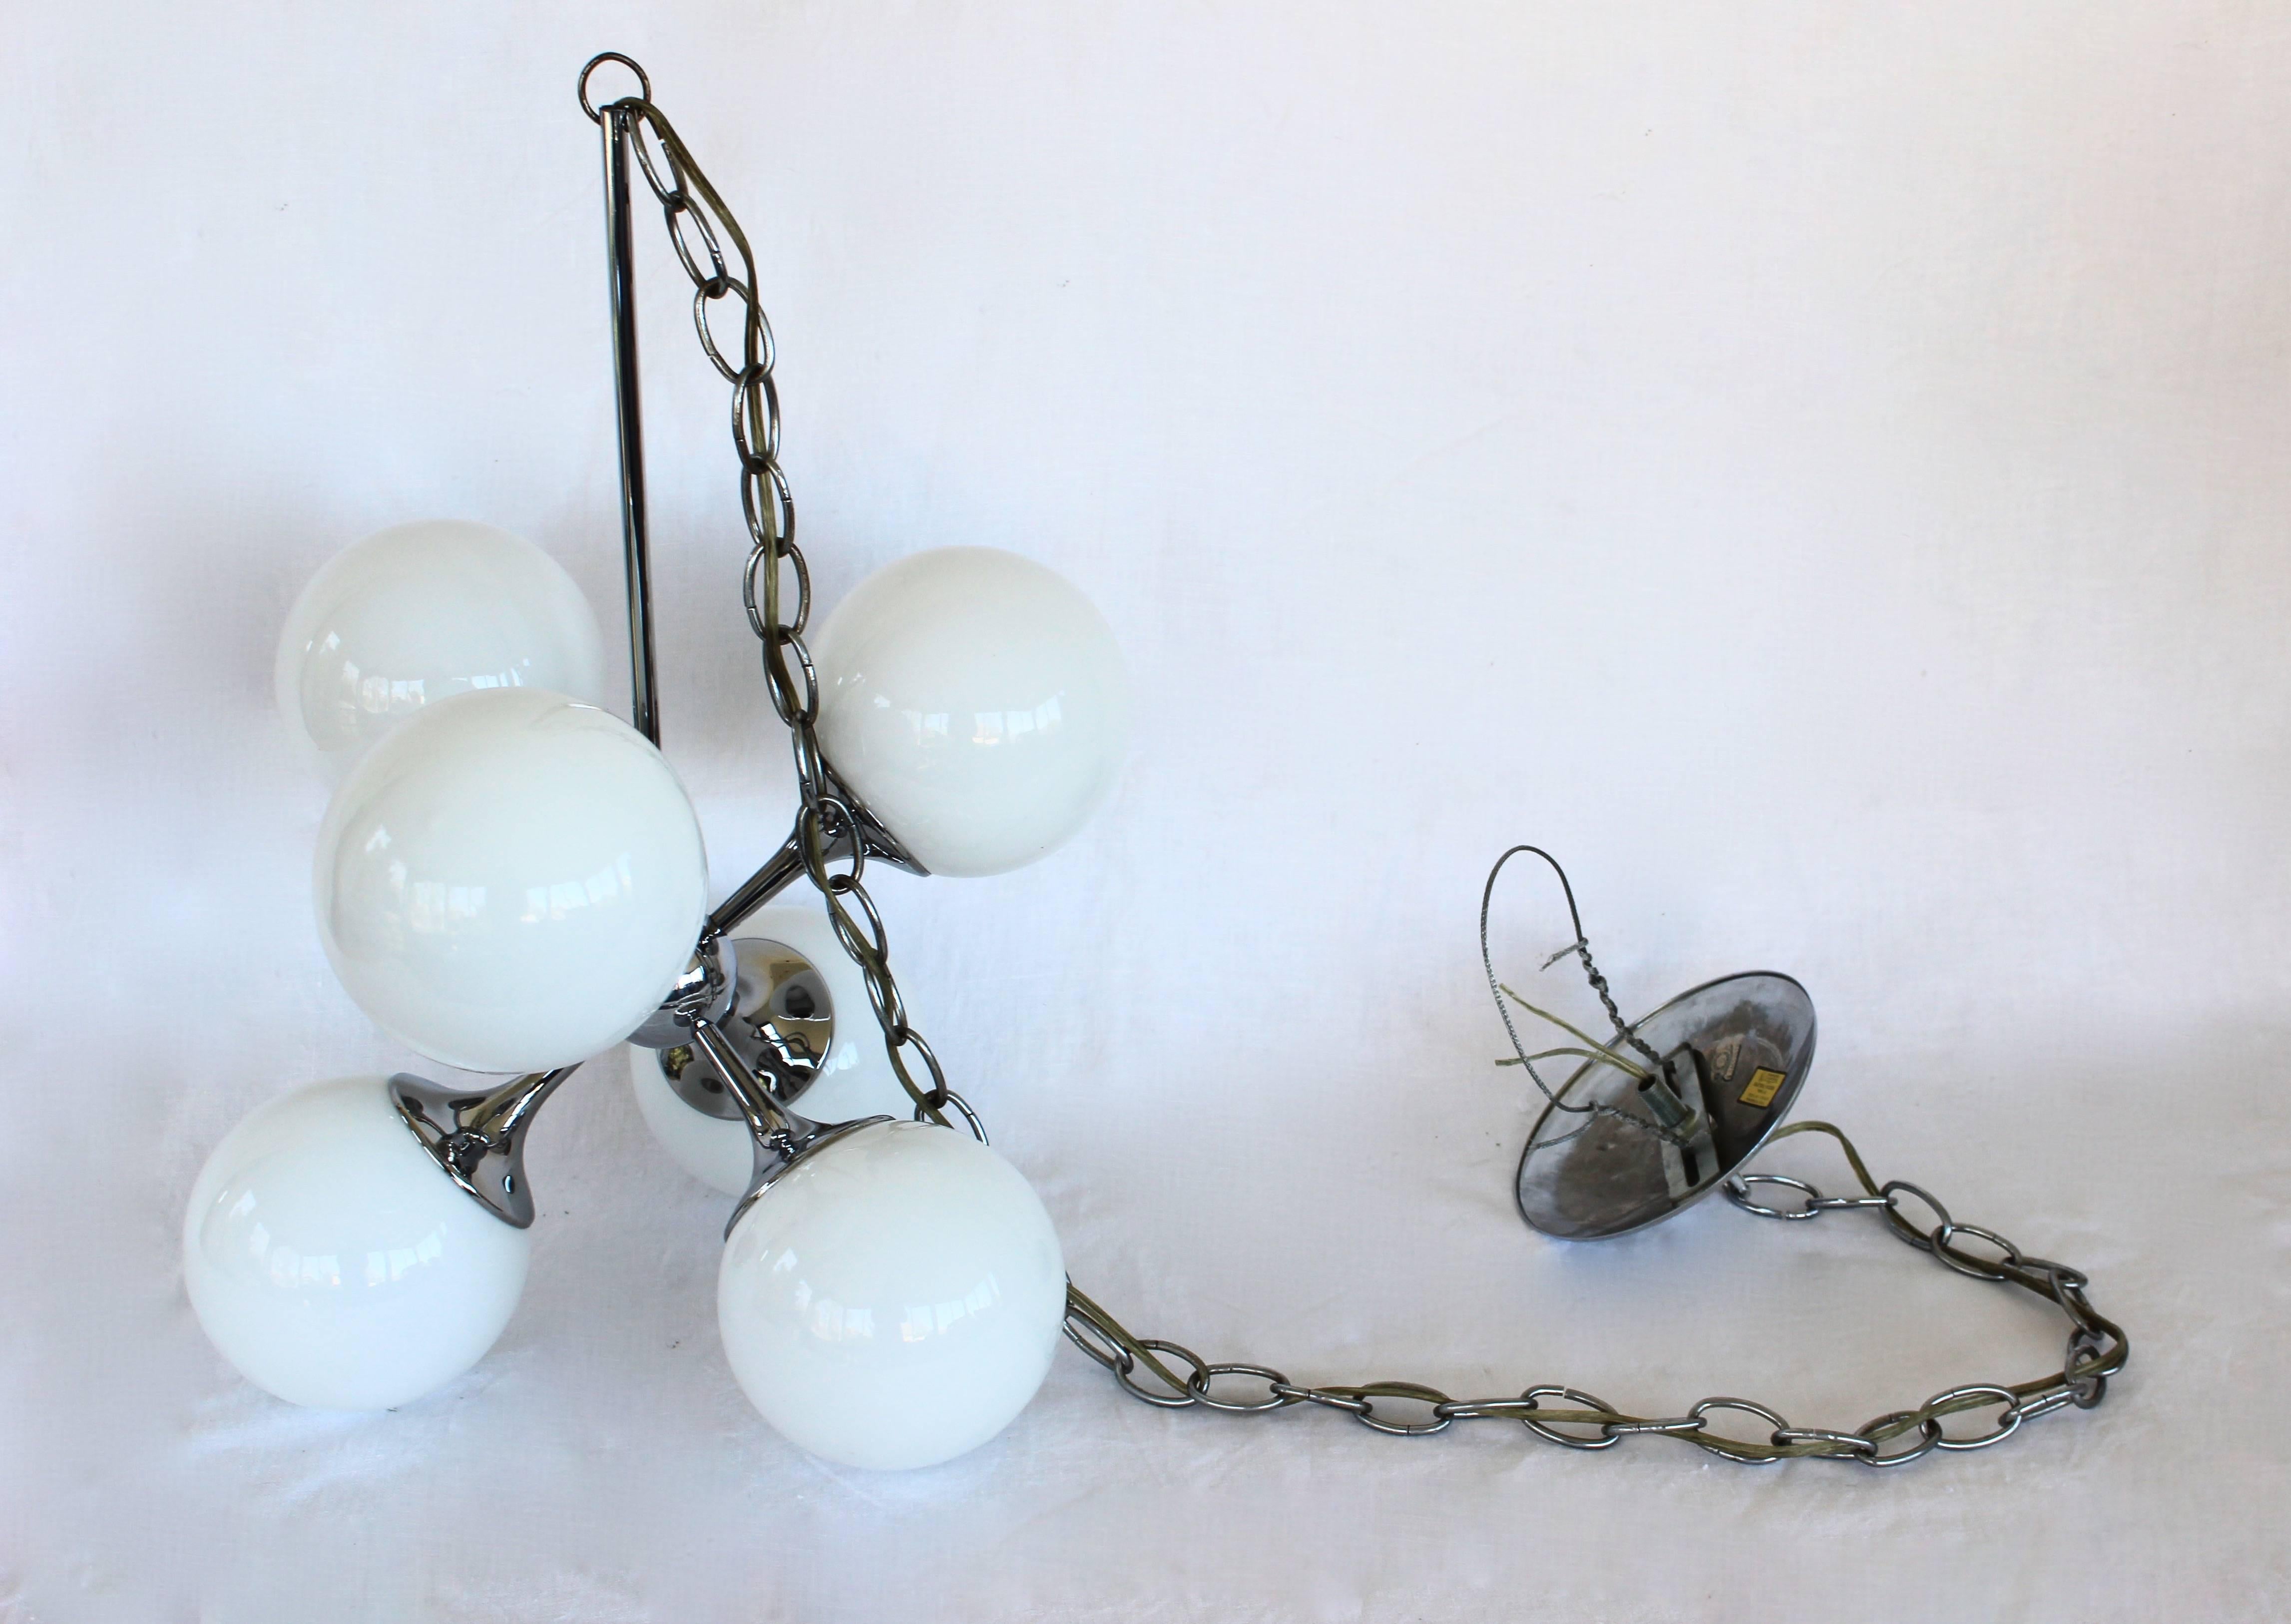 Lightolier Sputnik chandelier with six glass globes

Measures: 14